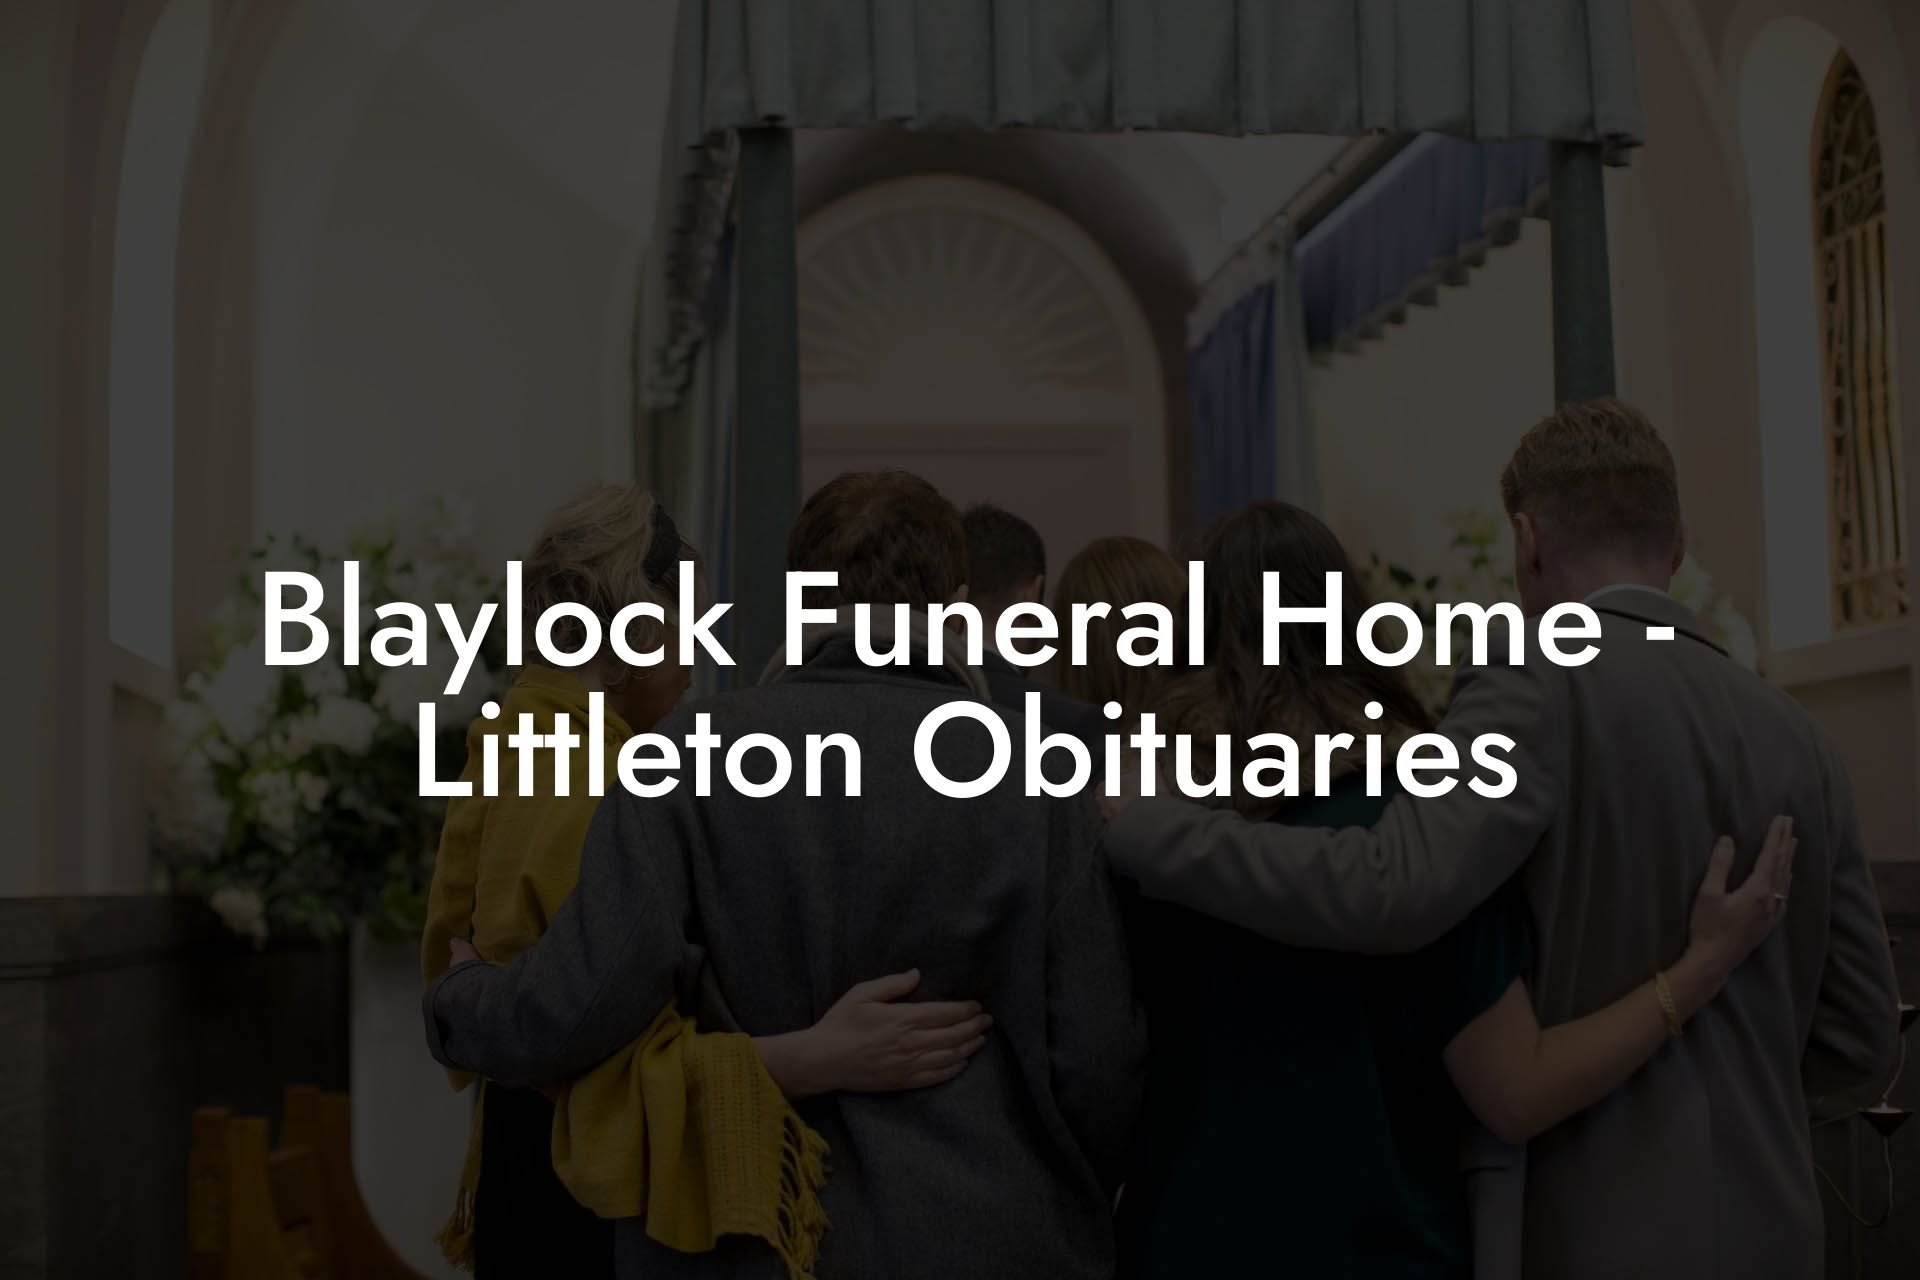 Blaylock Funeral Home - Littleton Obituaries